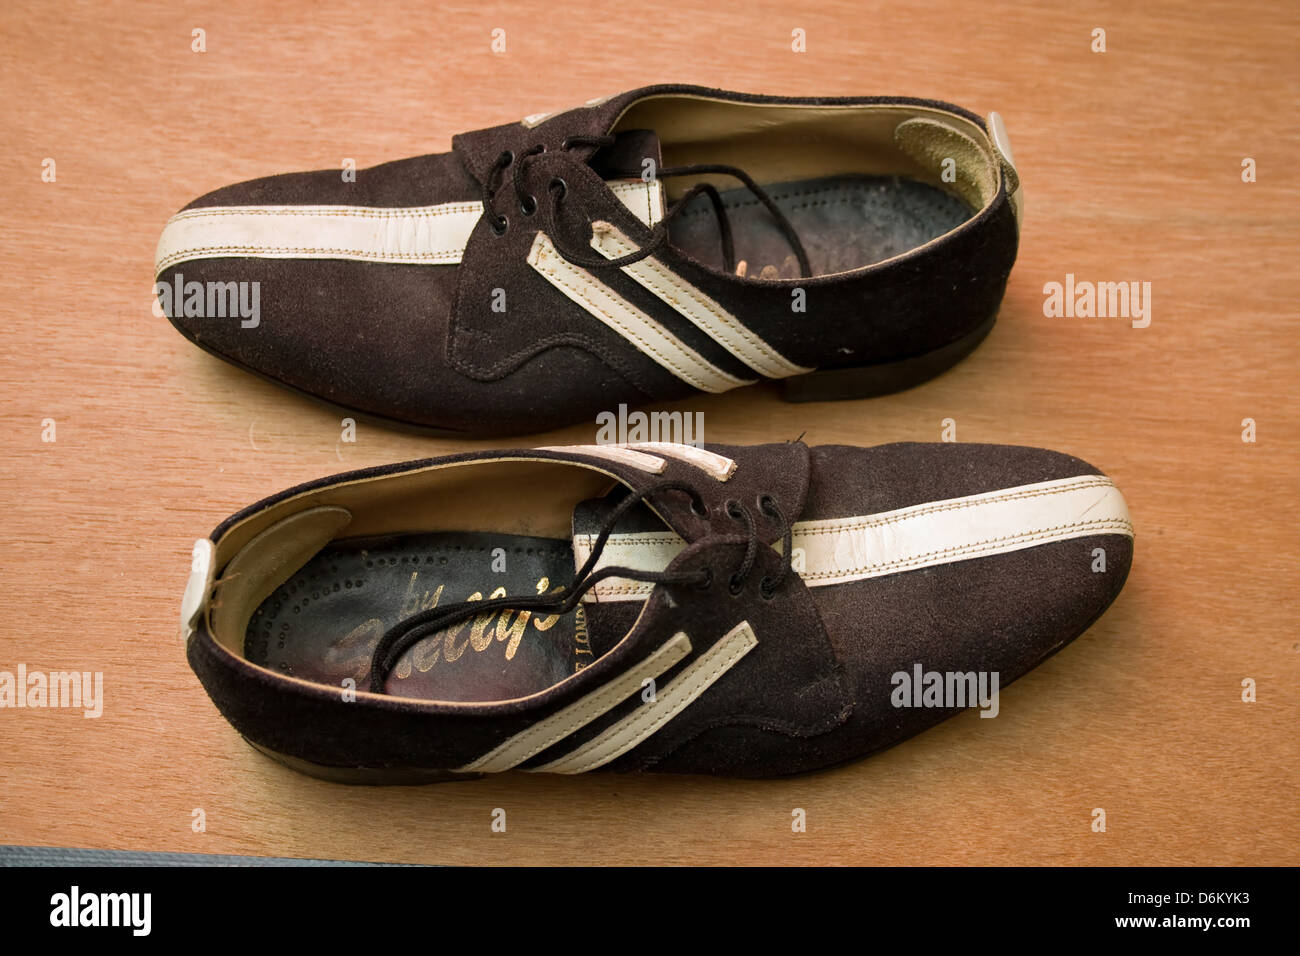 Mens mod shoes -Fotos und -Bildmaterial in hoher Auflösung – Alamy